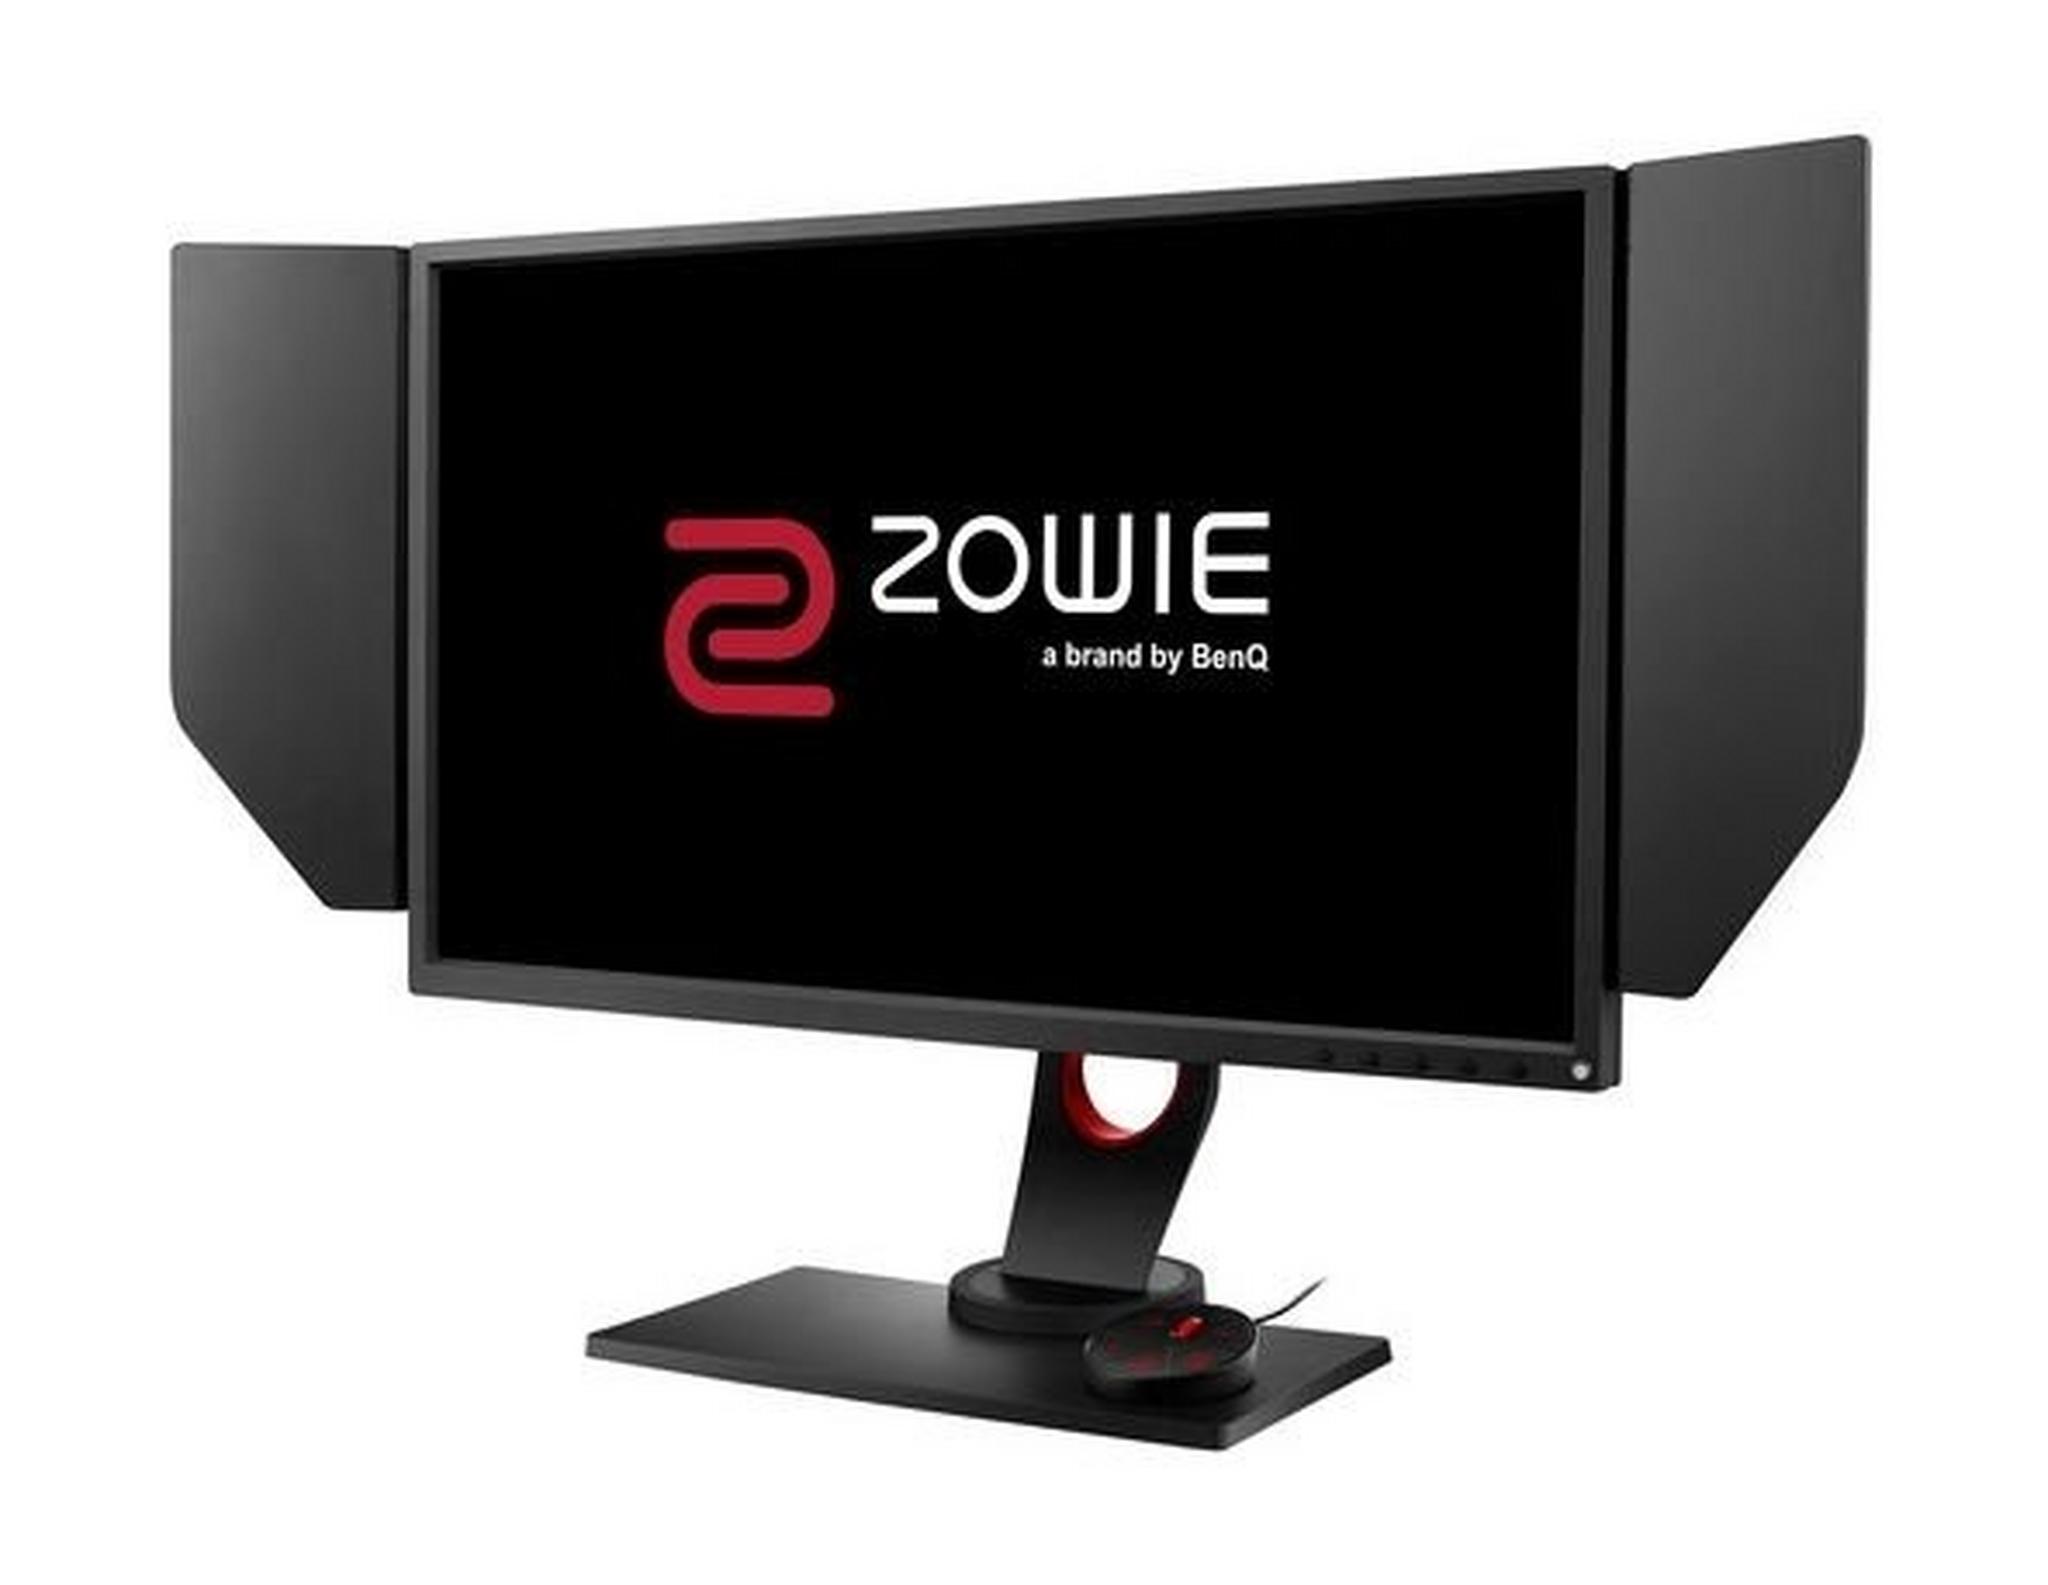 BenQ Zowie 27-inch LCD Gaming Monitor (XL2740) - Black